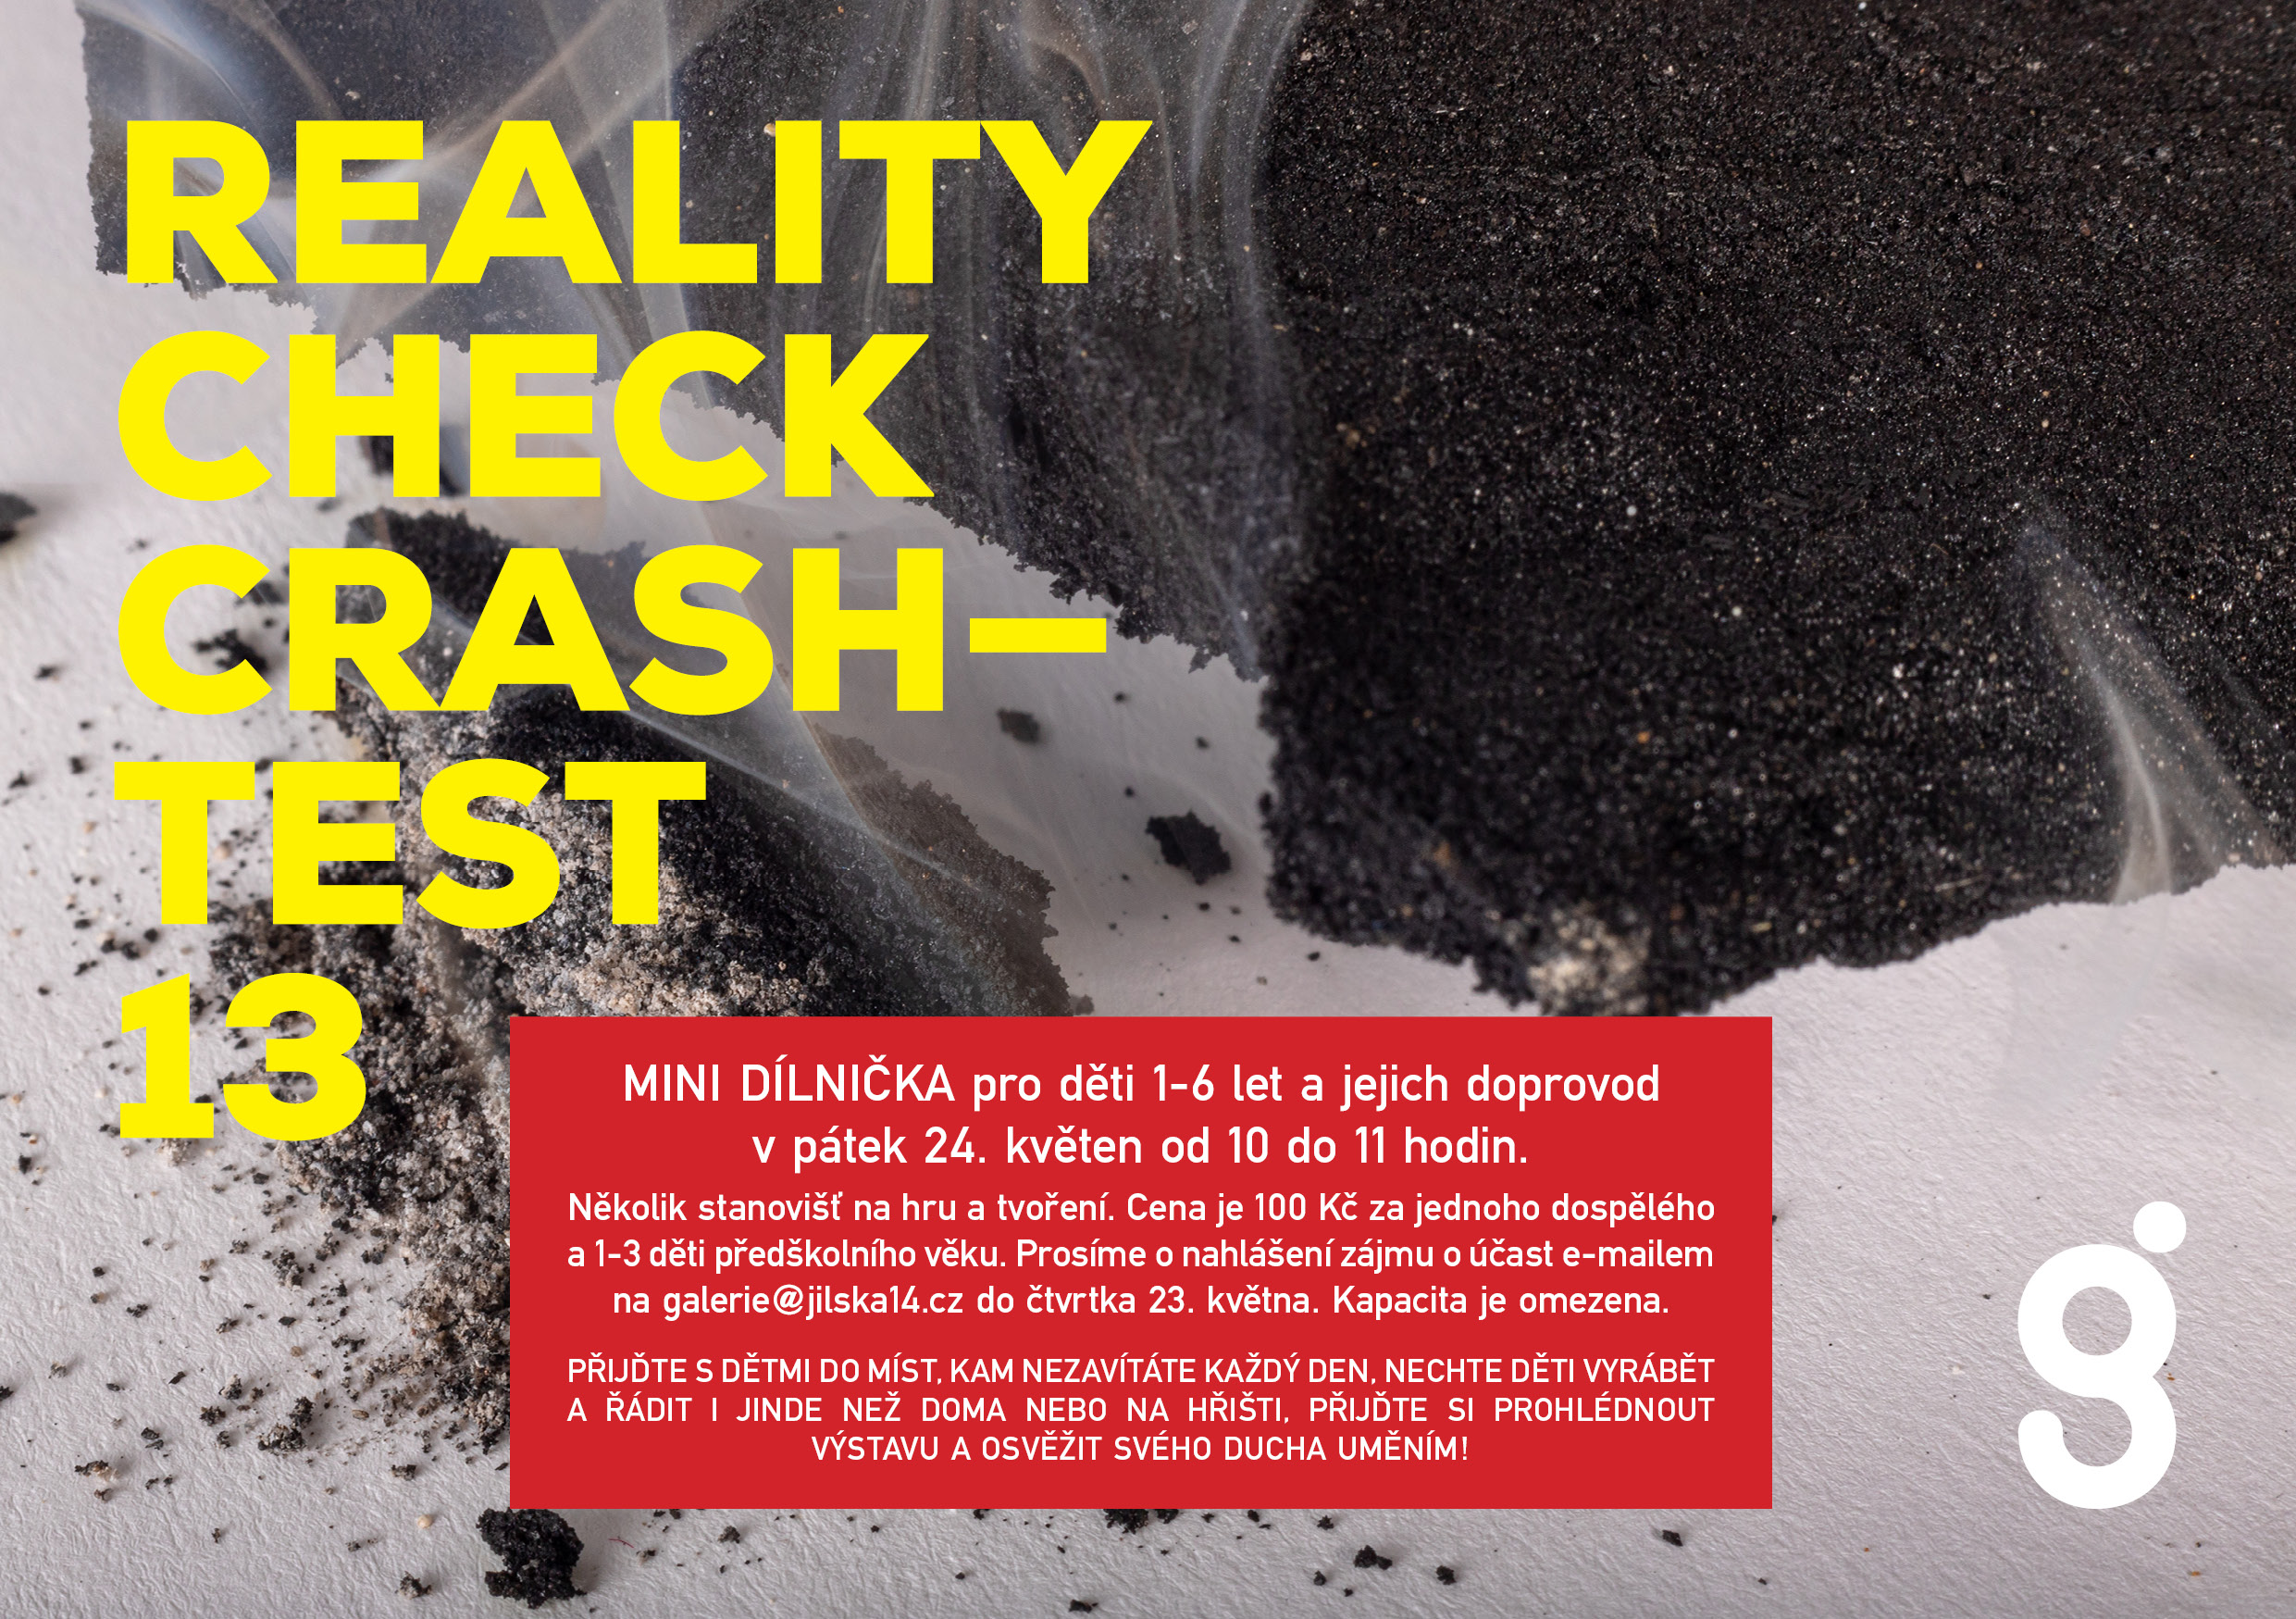 Mini dílnička - Reality Check Crash-Test 13